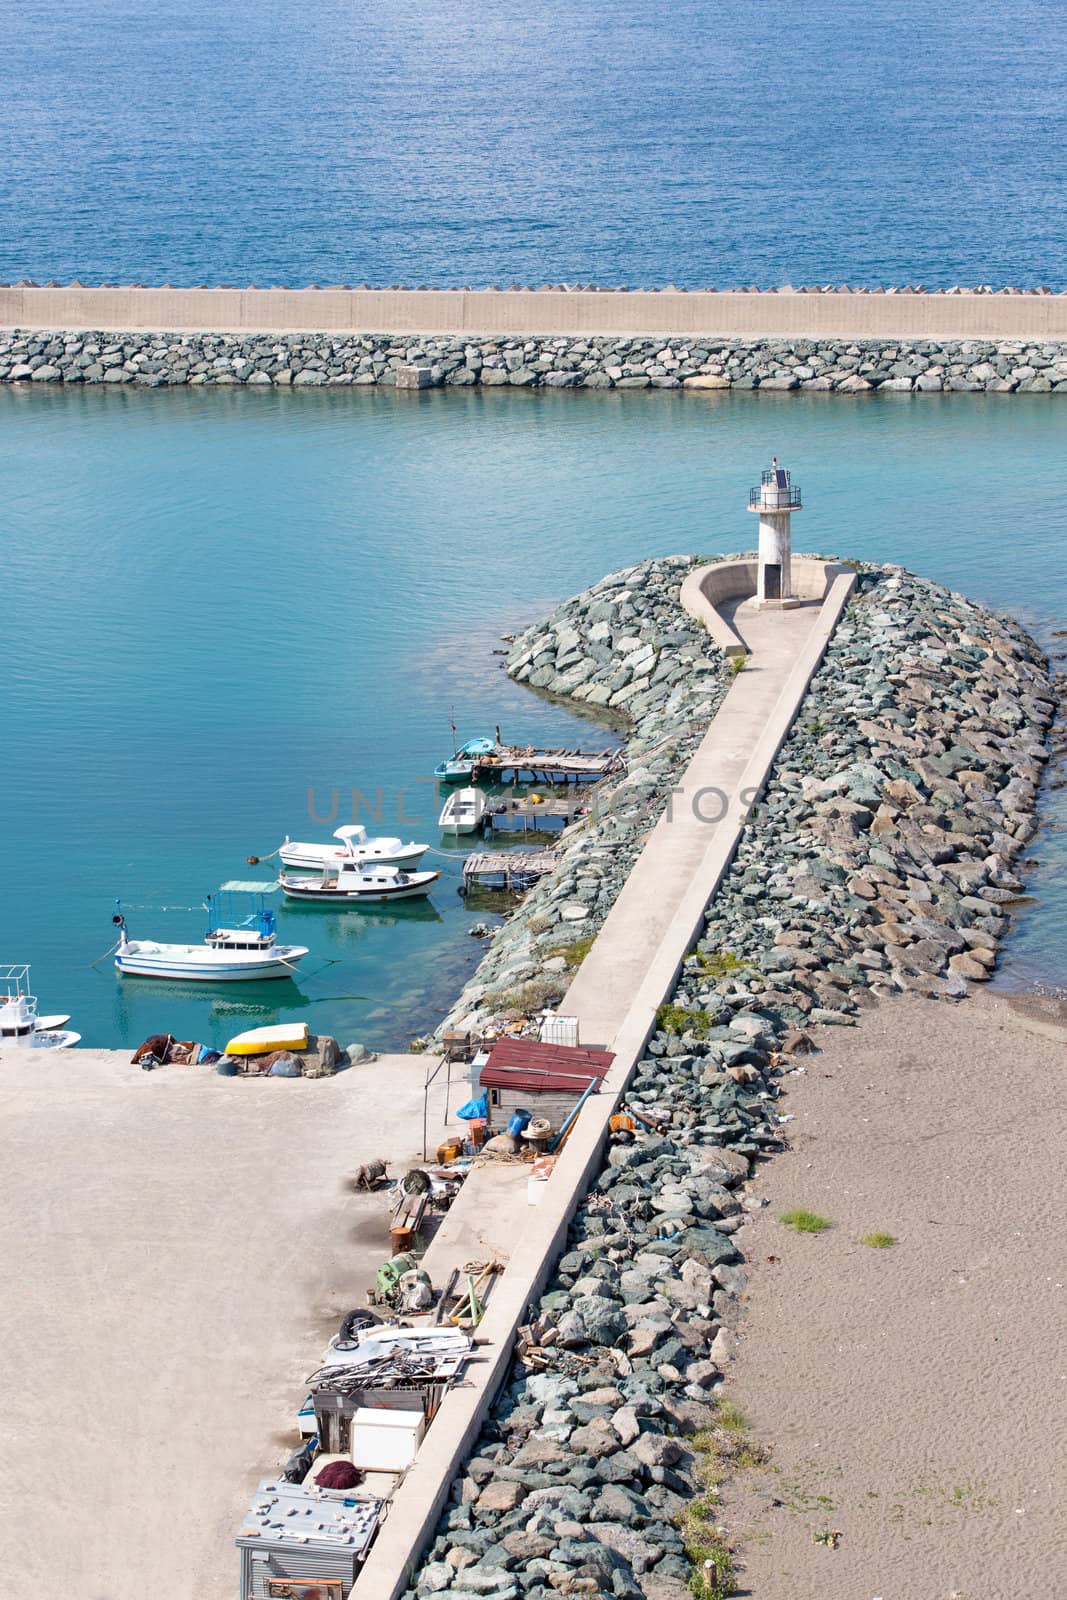 Jetties and Lighthouse in Northen Turkey Black Sea region